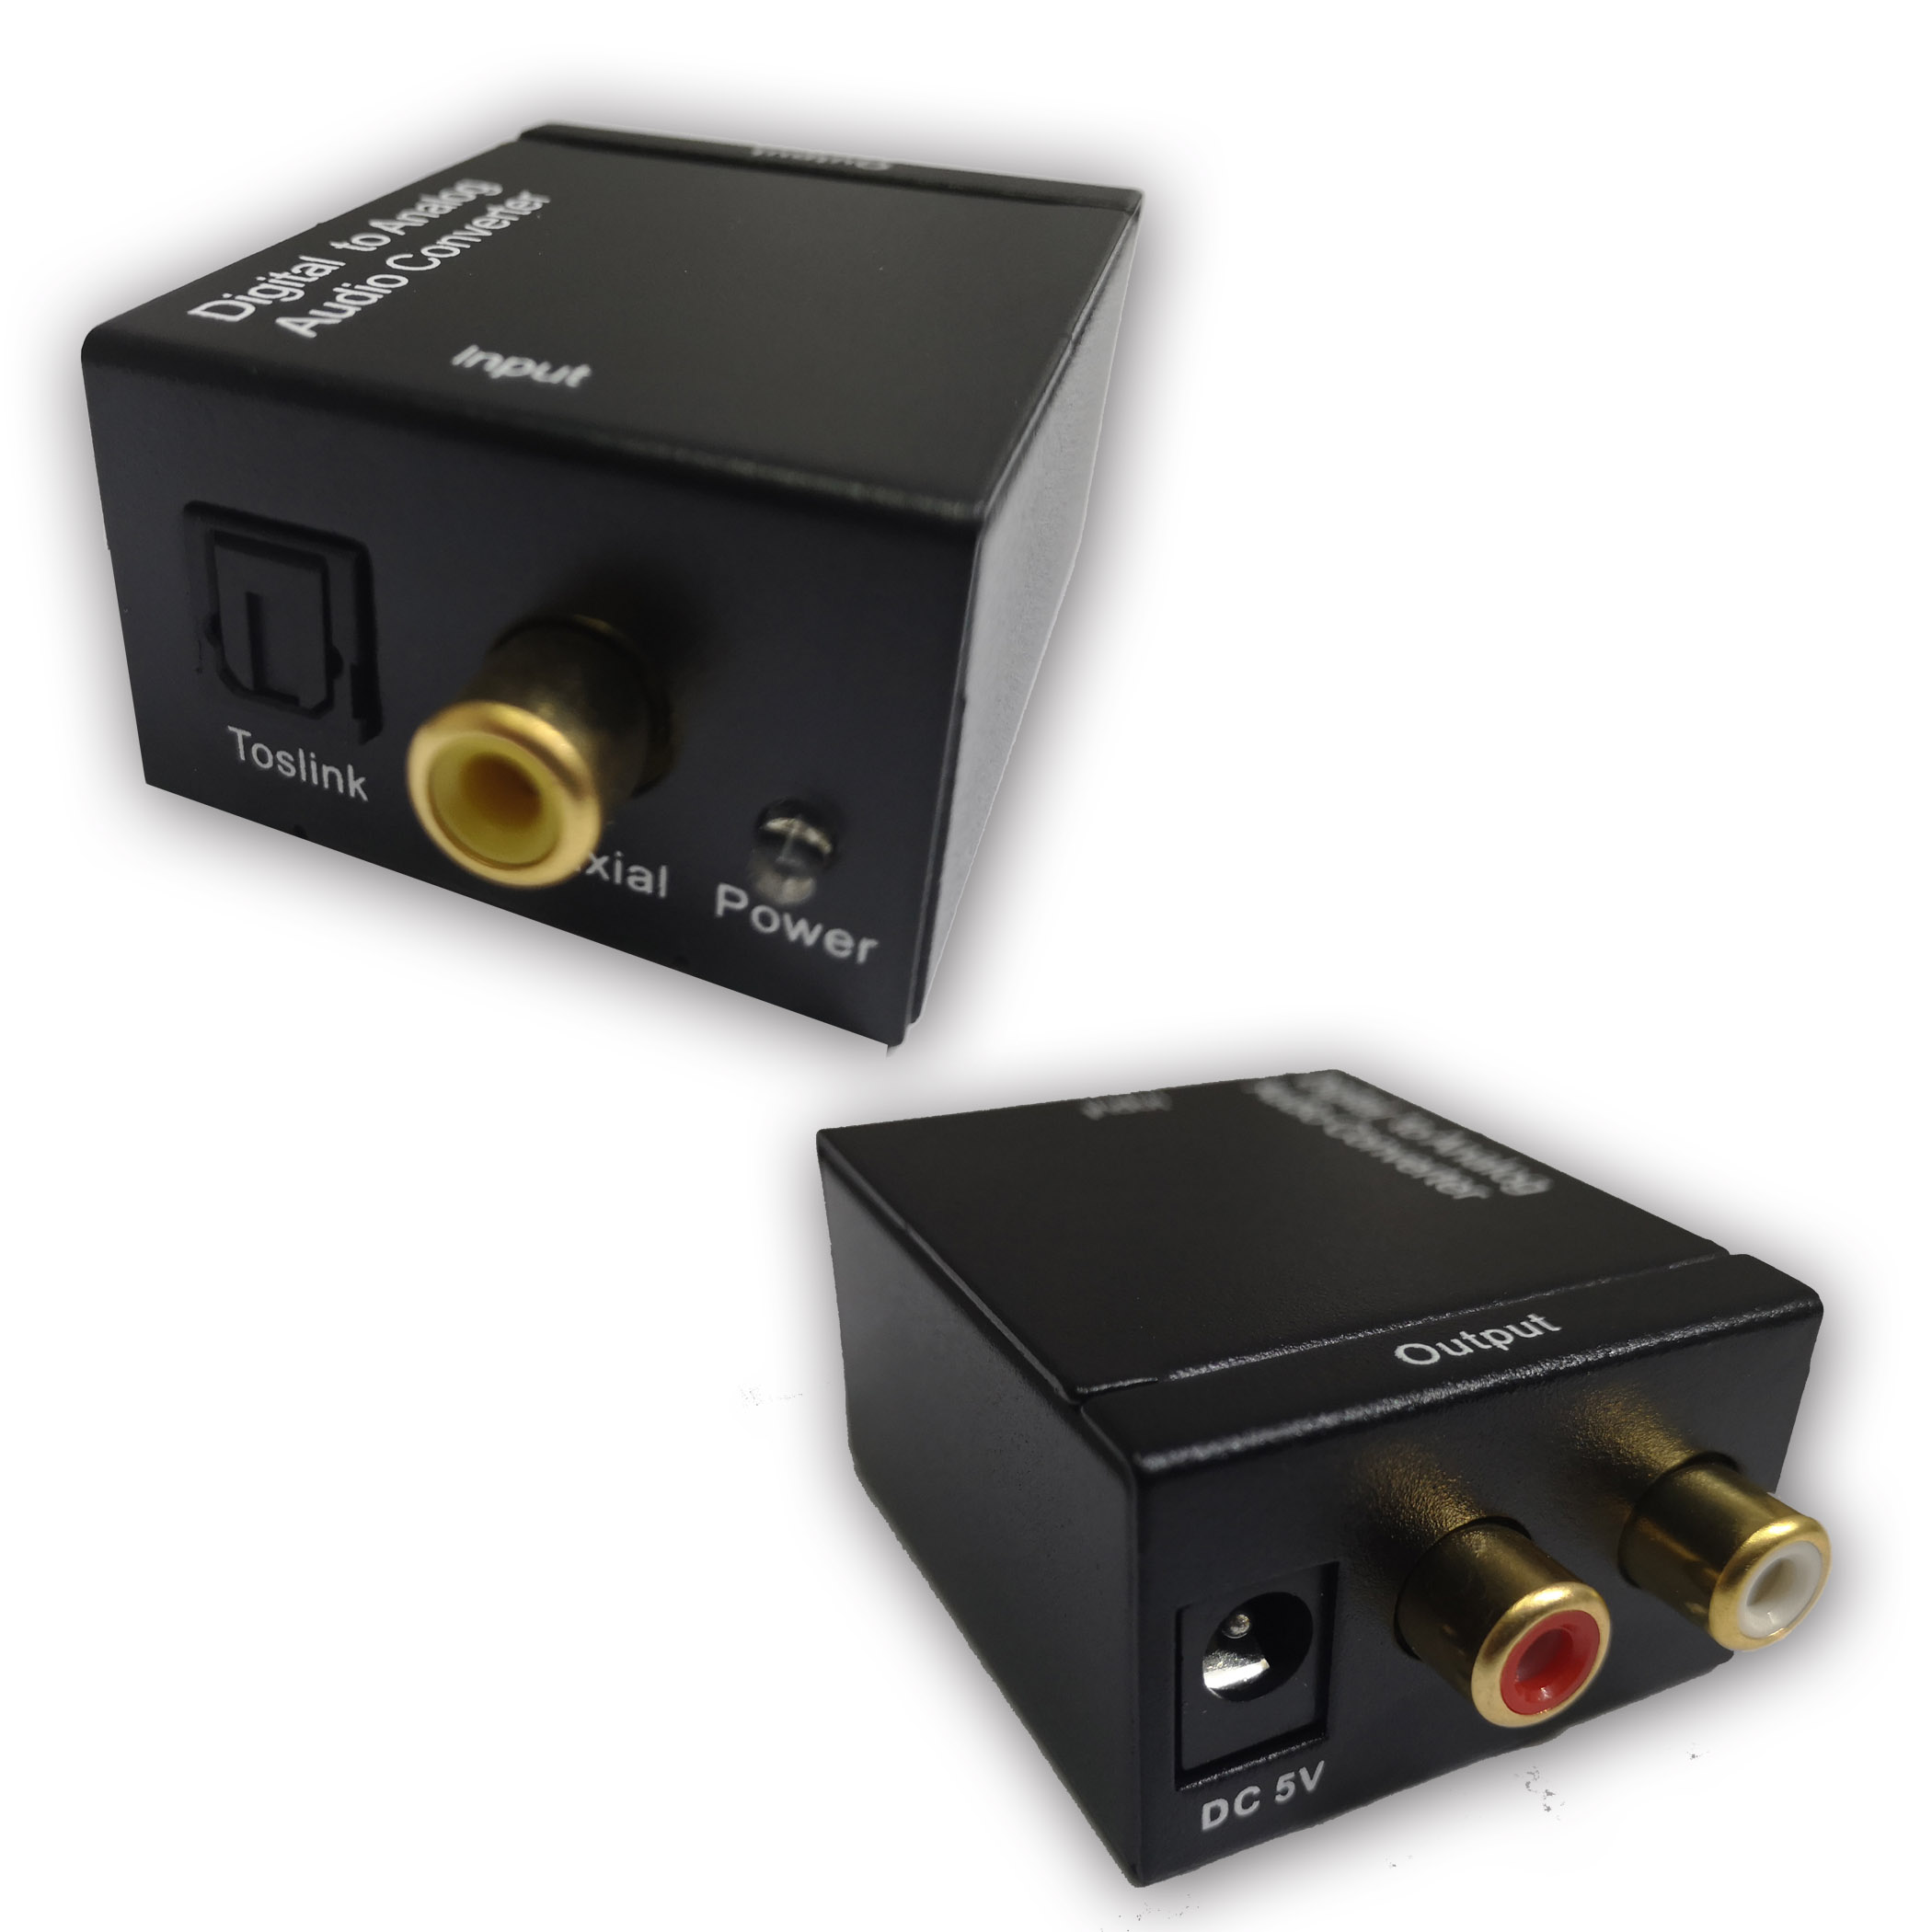 Convertidor de Audio Optico Digital a RCA NETCOM Digital a Análogo I  Oechsle - Oechsle